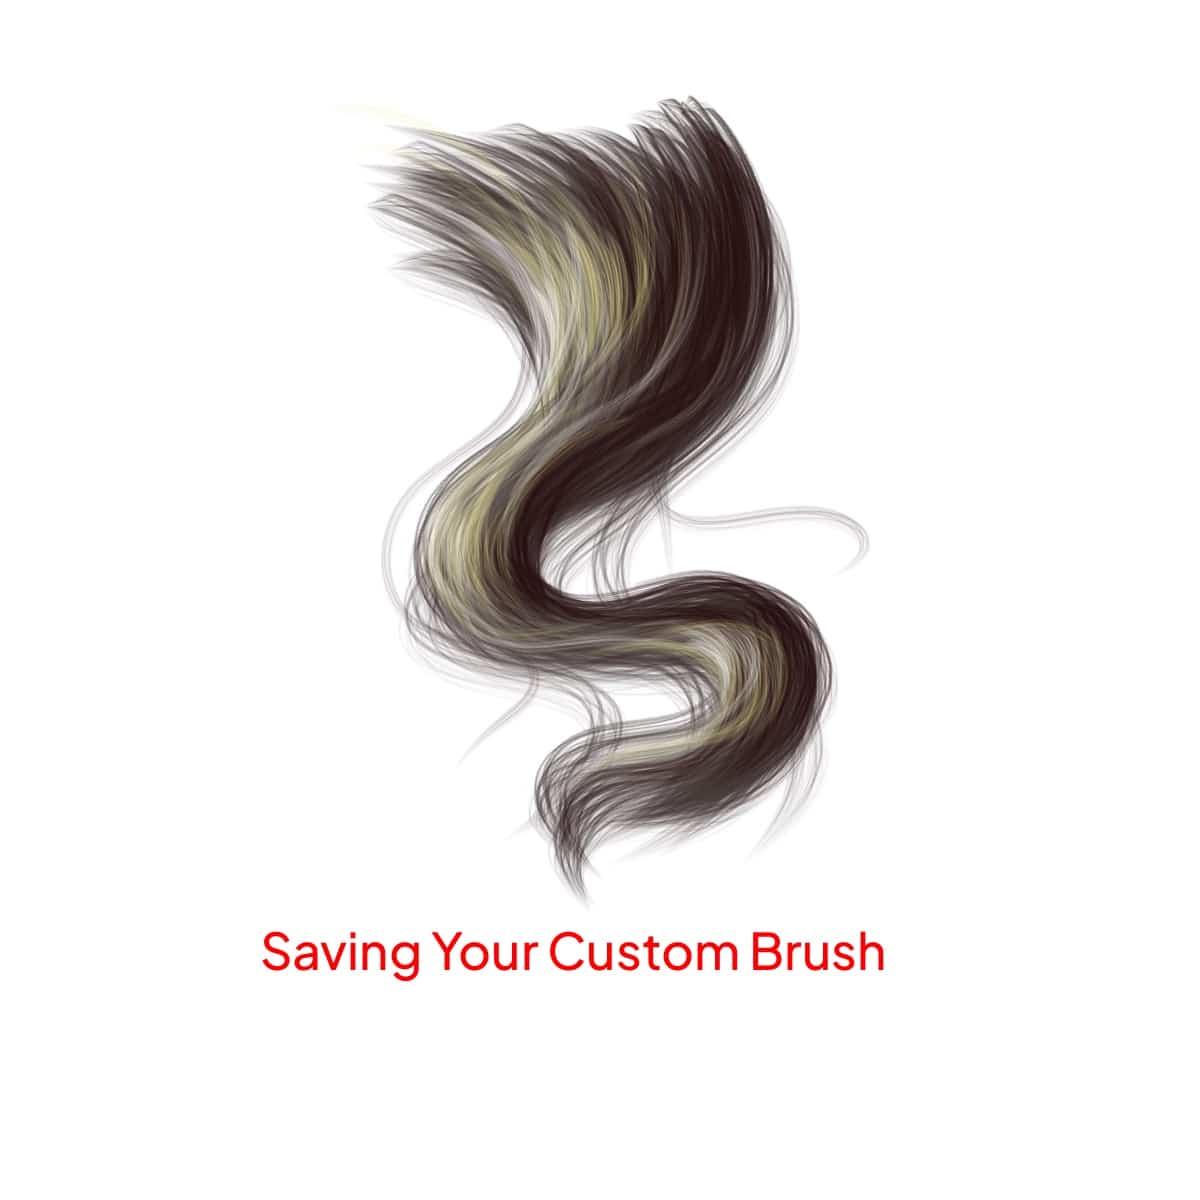 Saving your brush